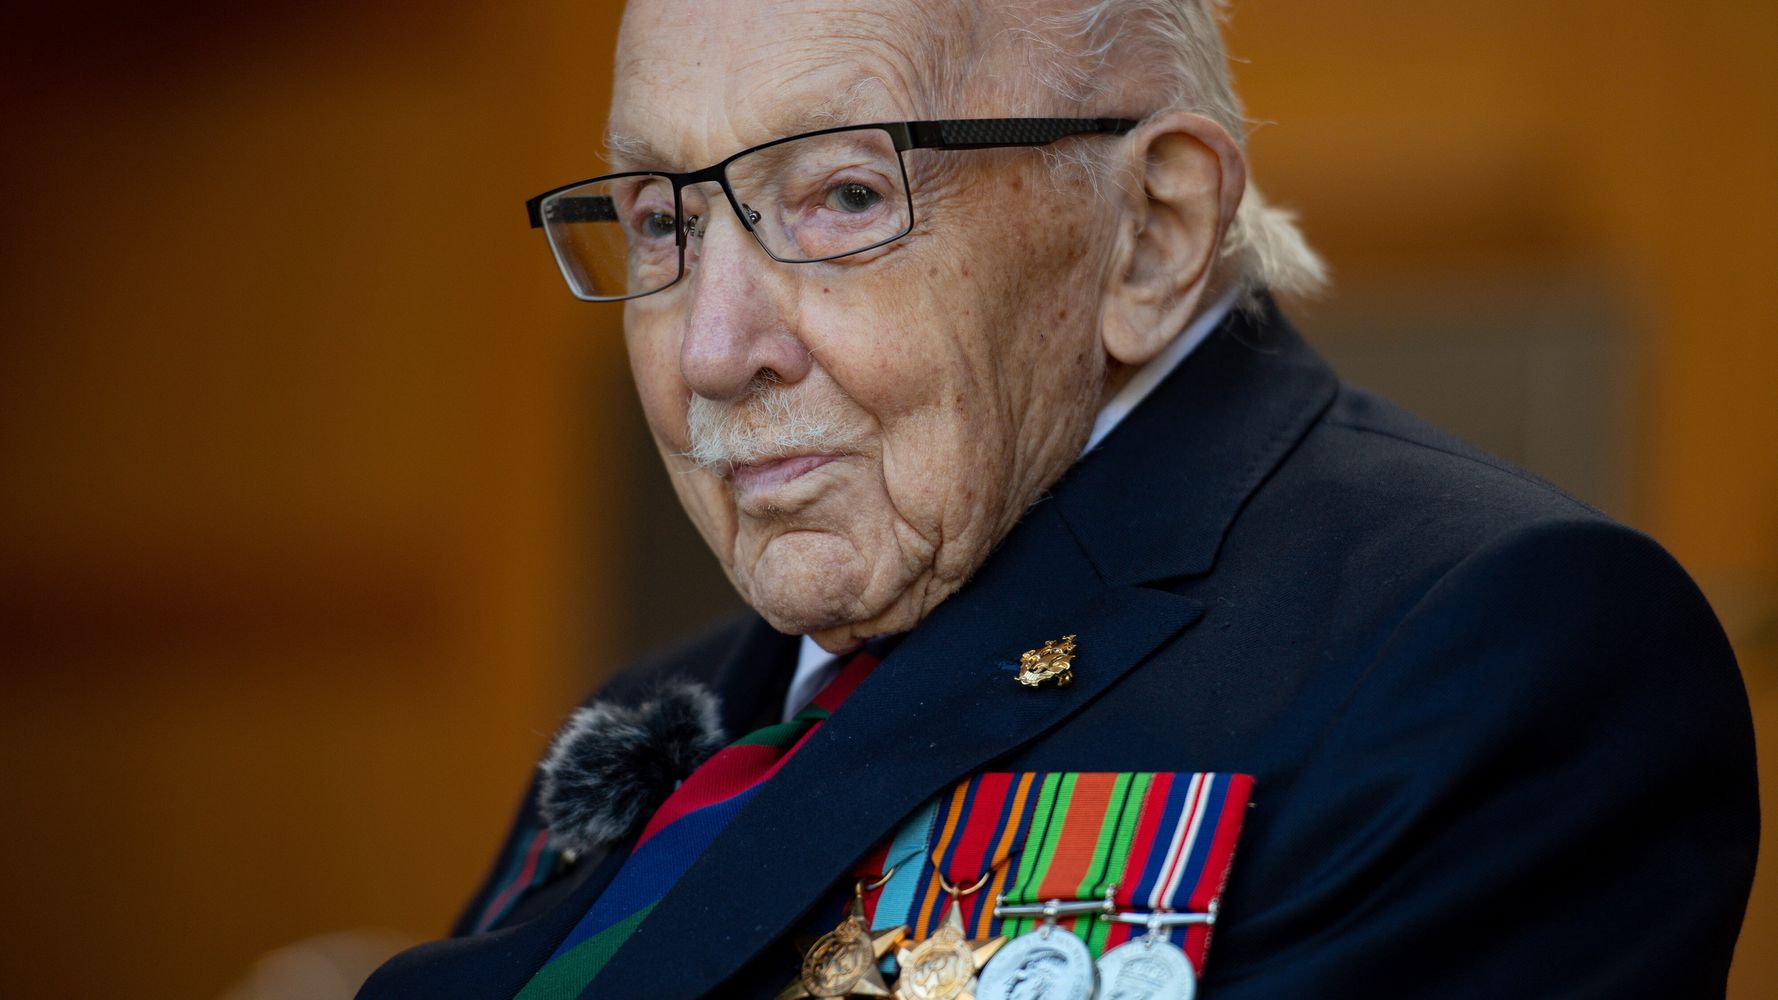 Captain Tom Moore Ww2 Veteran Who Raised Millions For Uk Health Workers Dies Age 100